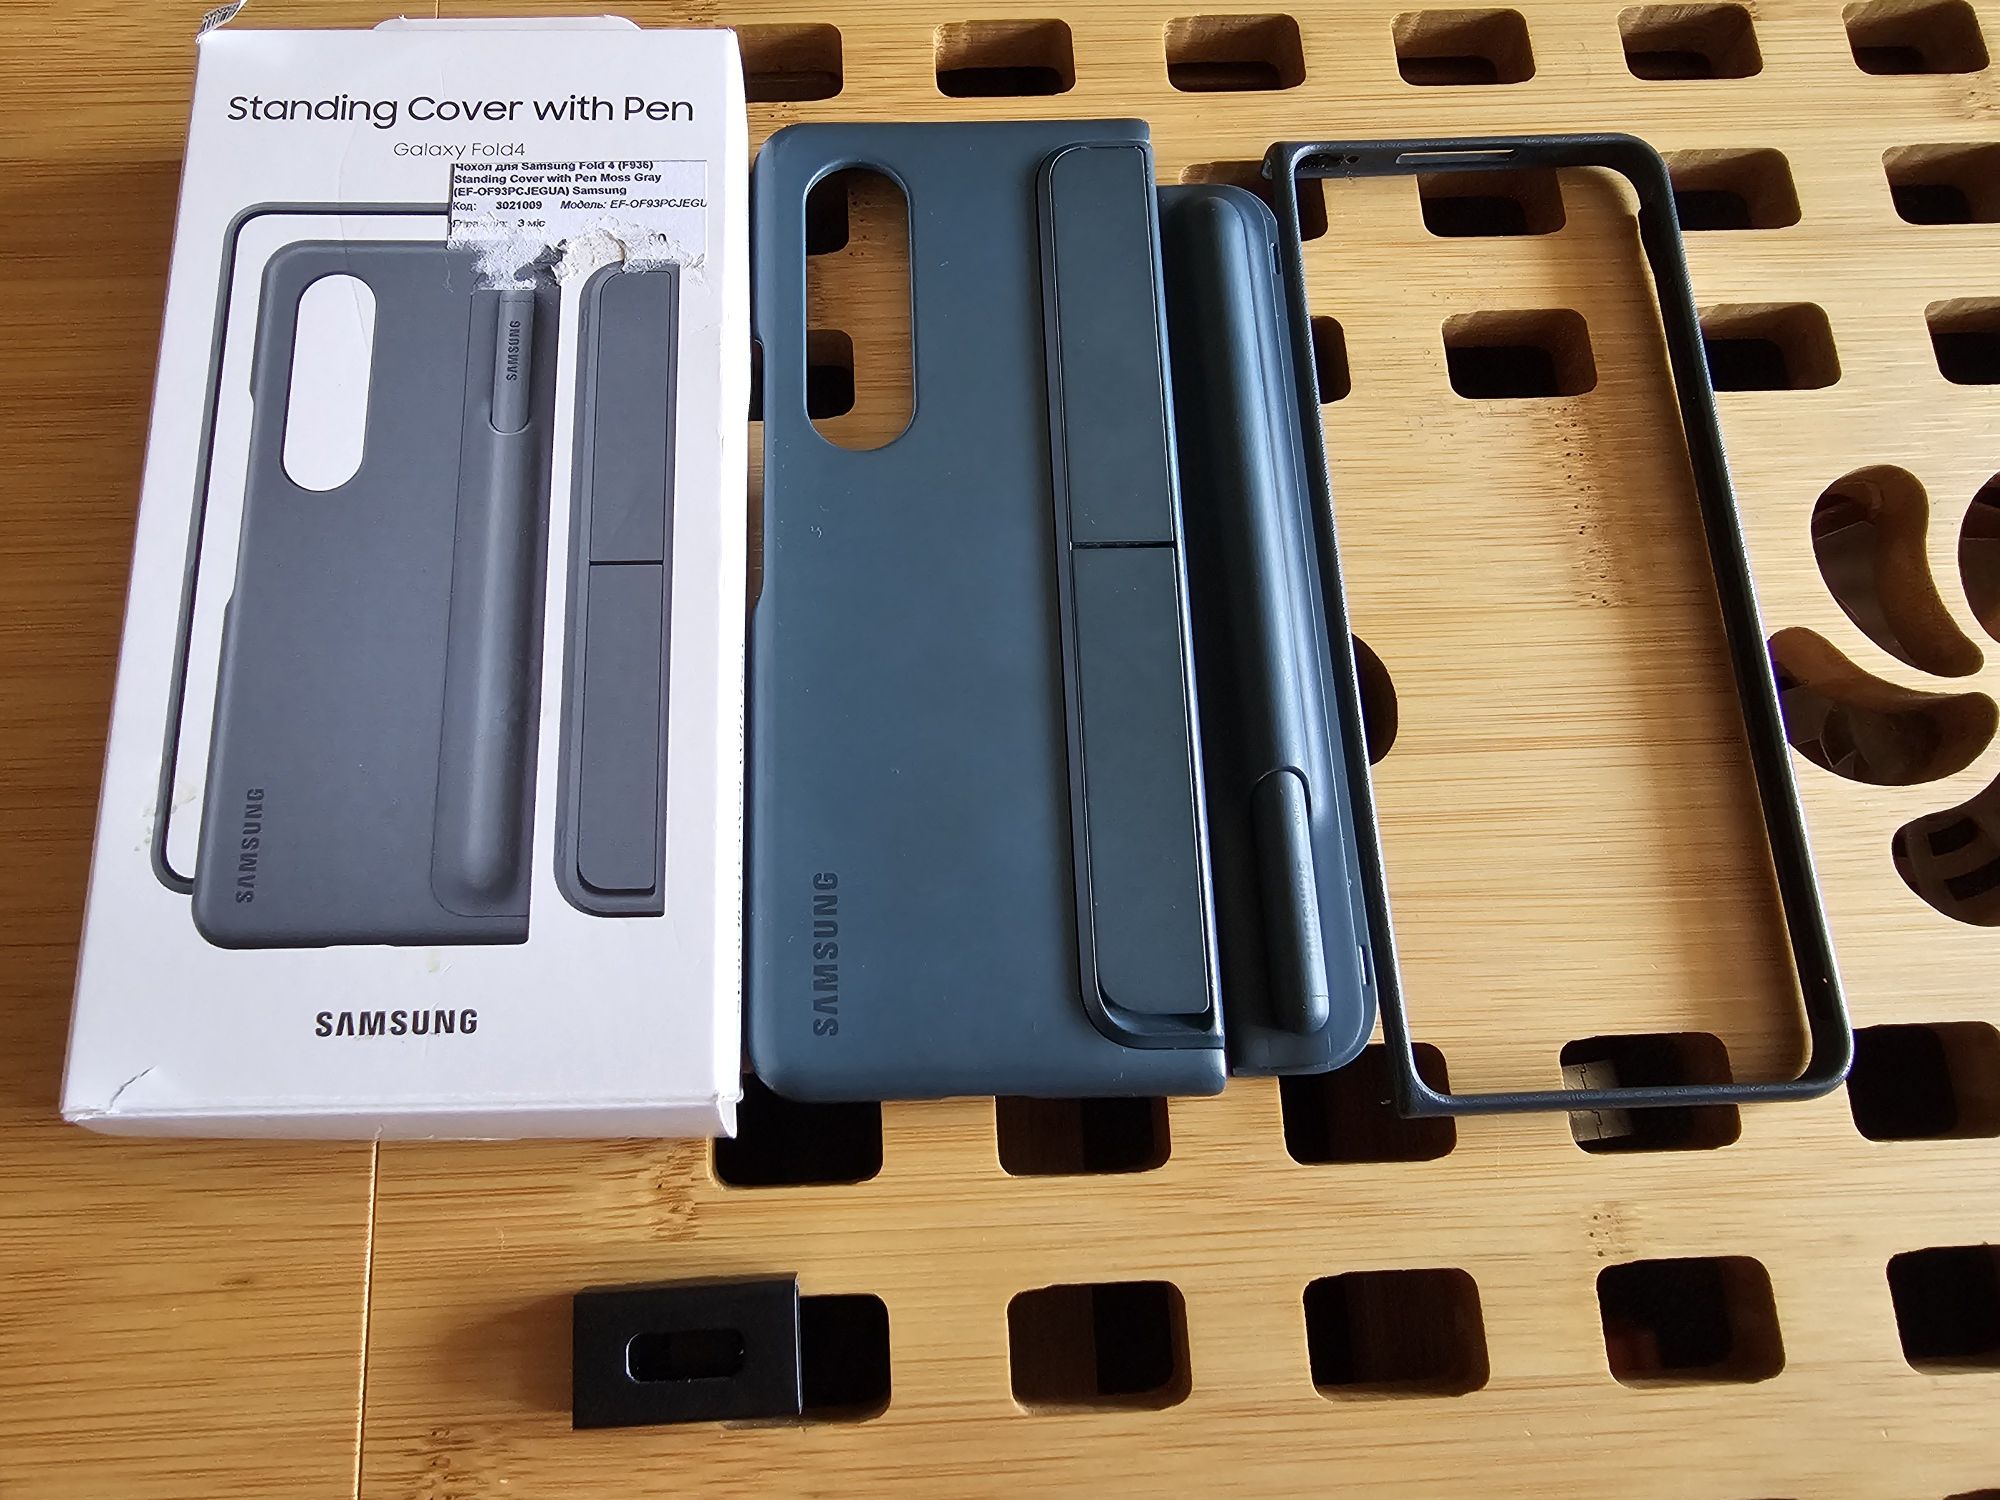 Чехол на Samsung galaxy fold 4 standing cover with pen со стилусом